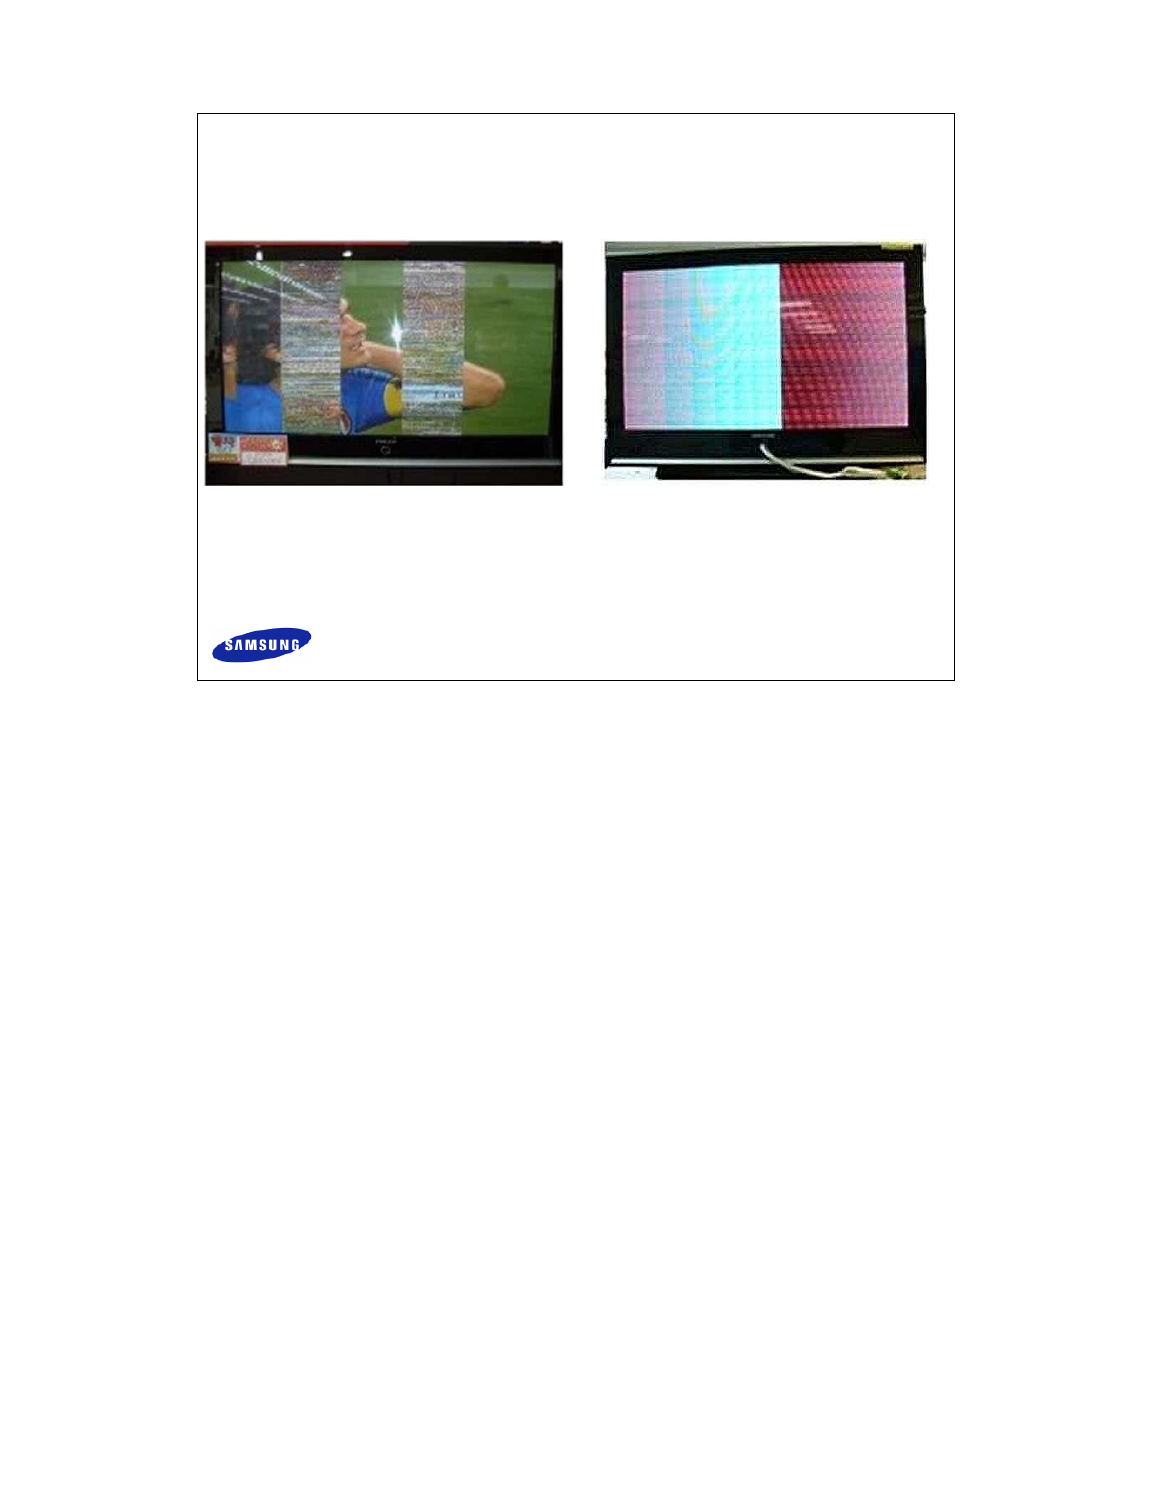 Samsung Plasma TV Technical Training Manual 